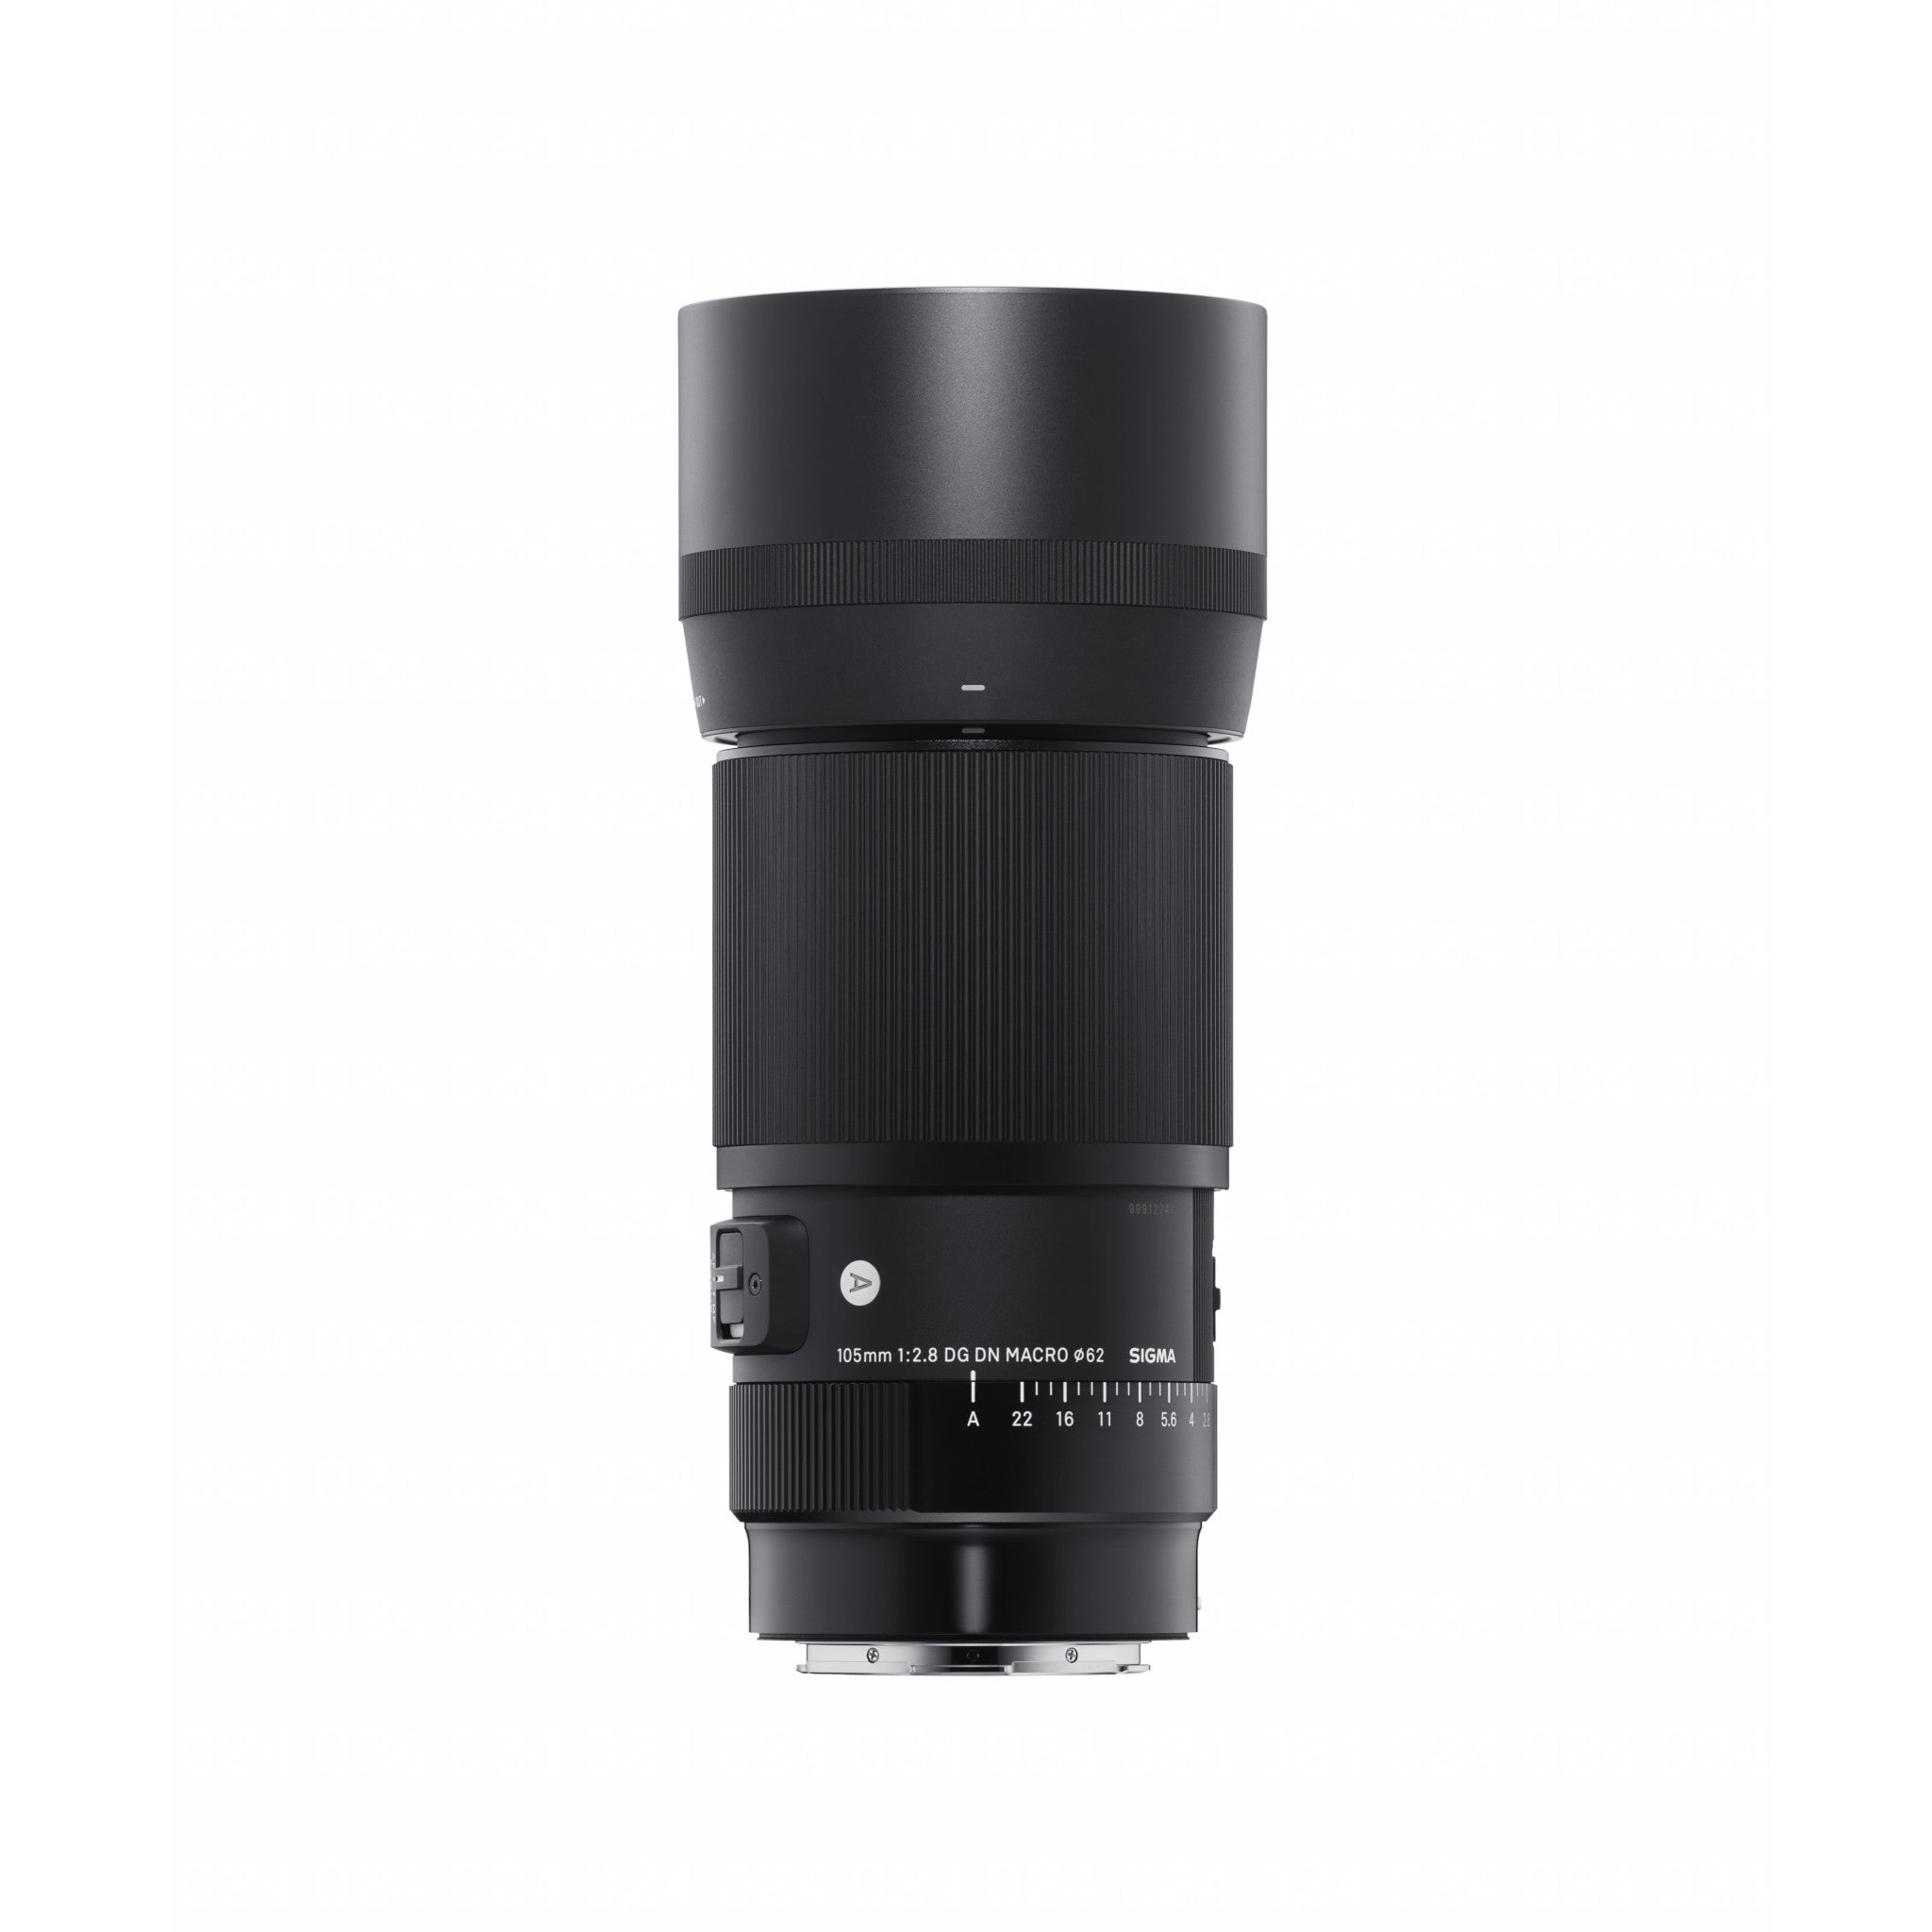 Sigma 105mm f2.8 EX DG OS HSM Macro lens